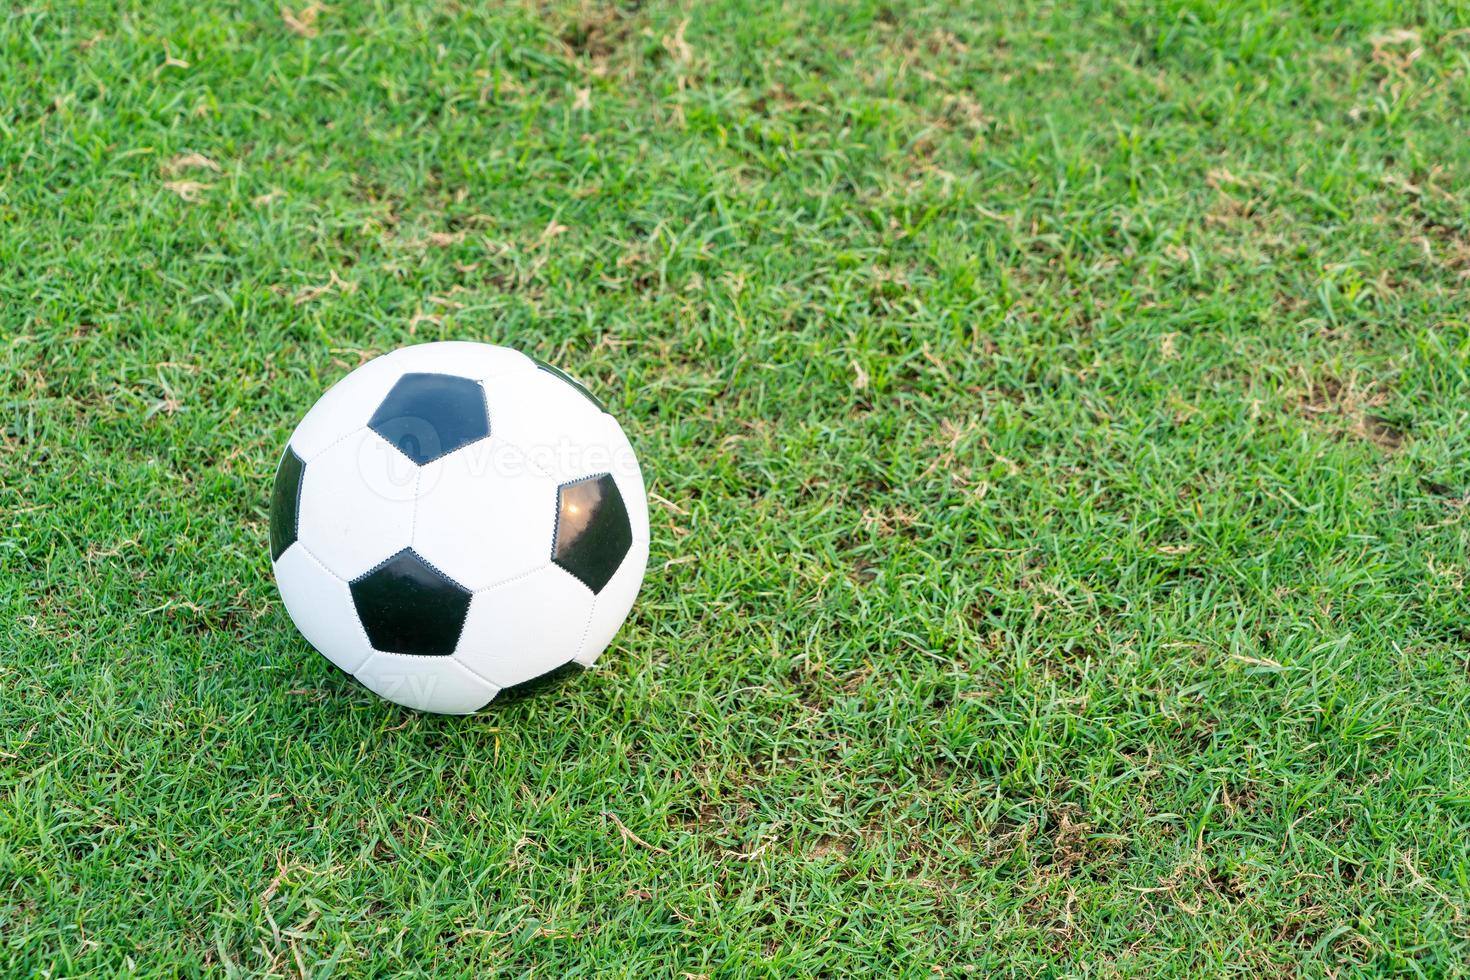 Soccer ball on the ball field photo